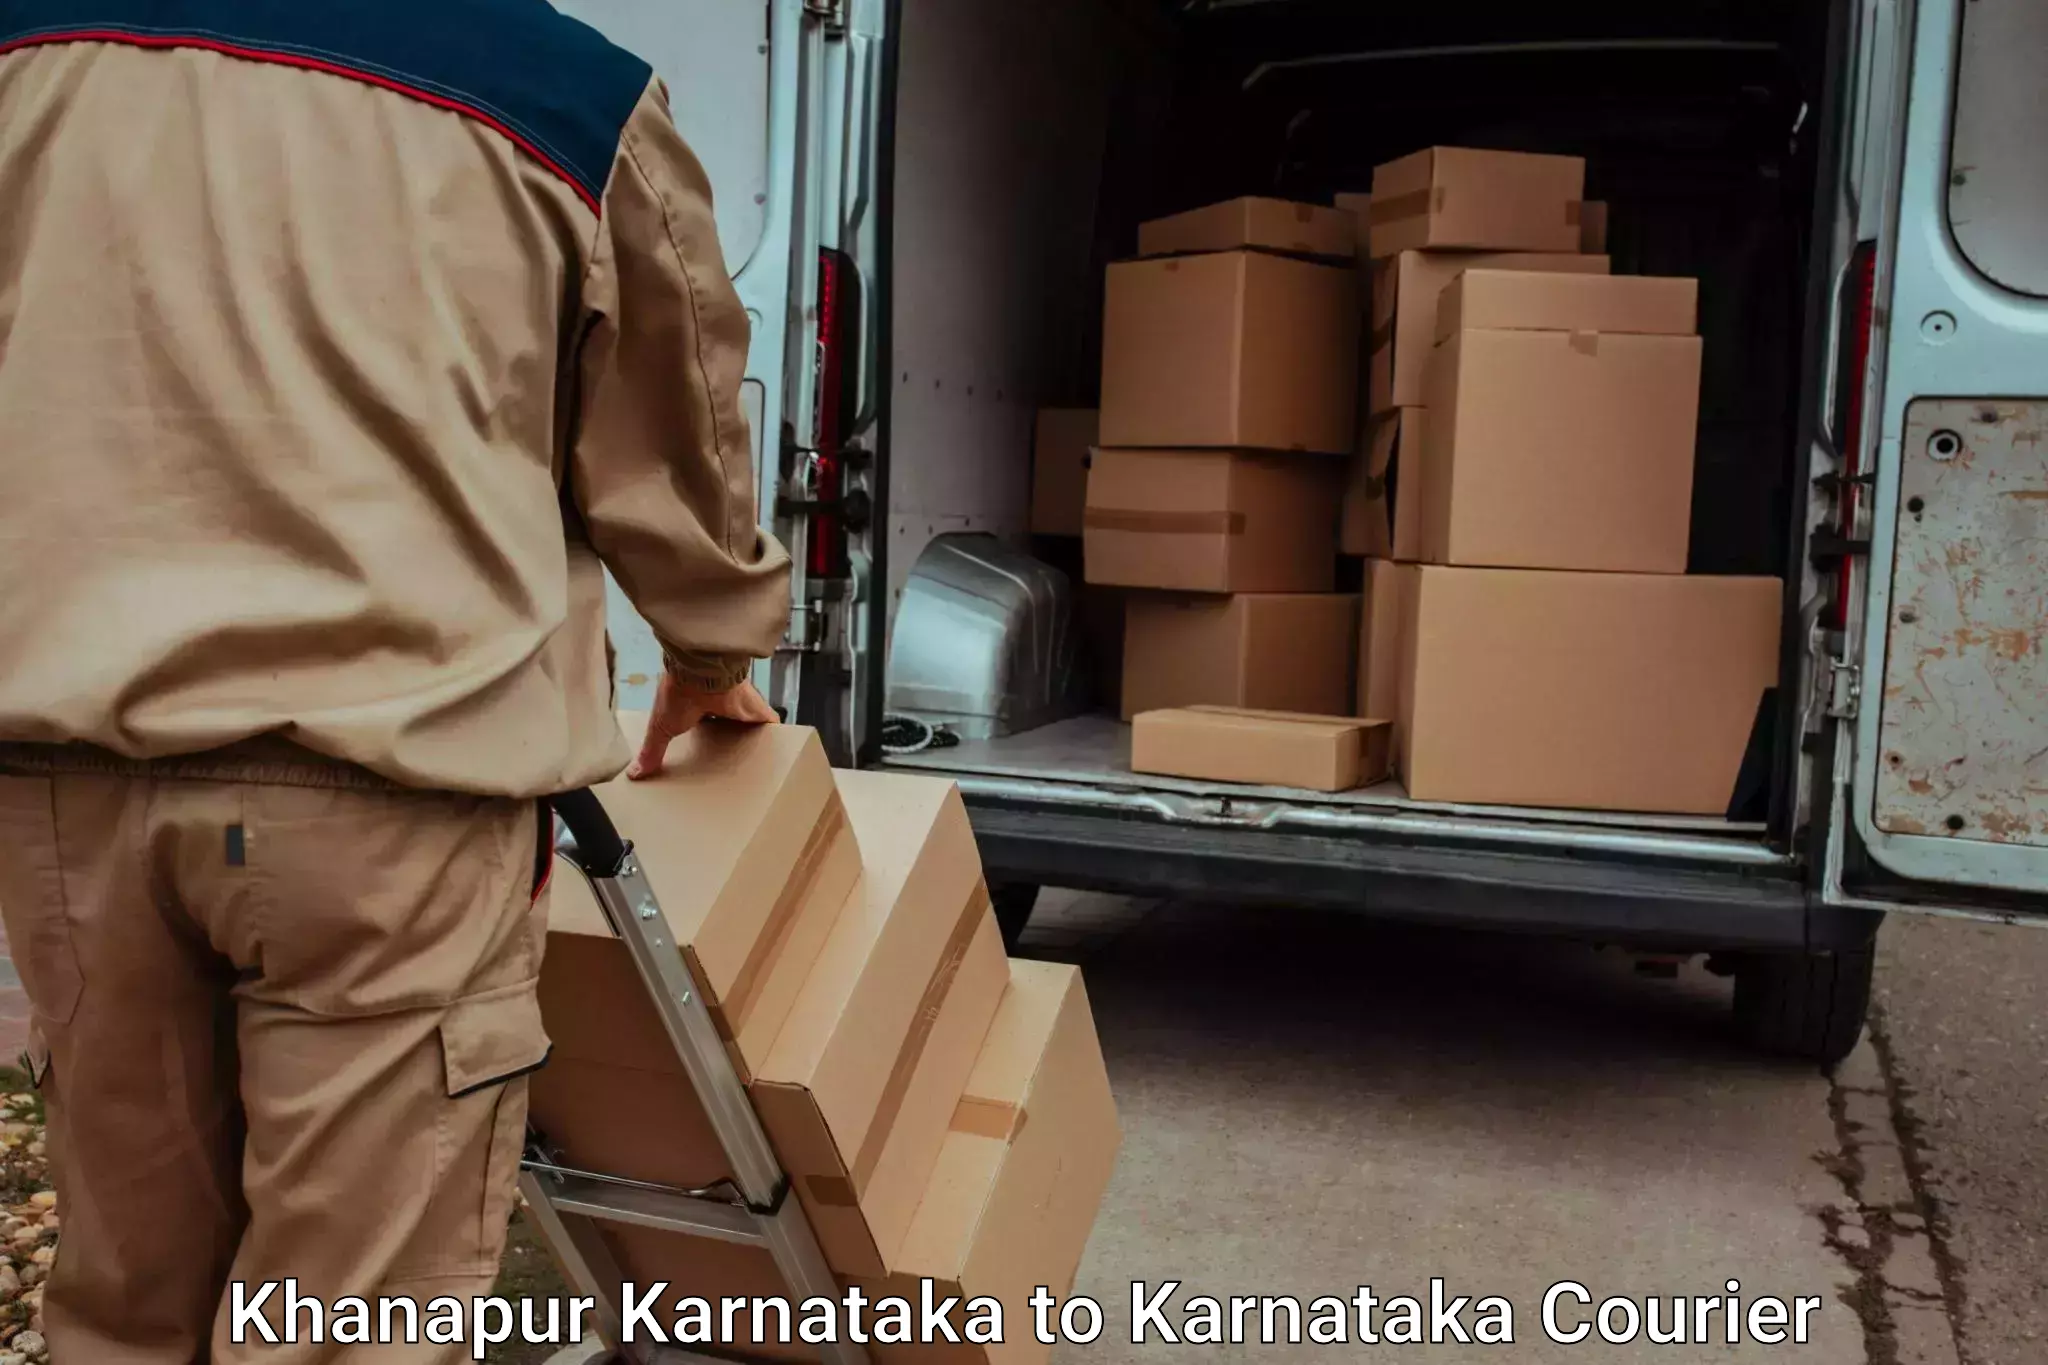 Same day luggage service in Khanapur Karnataka to Sringeri